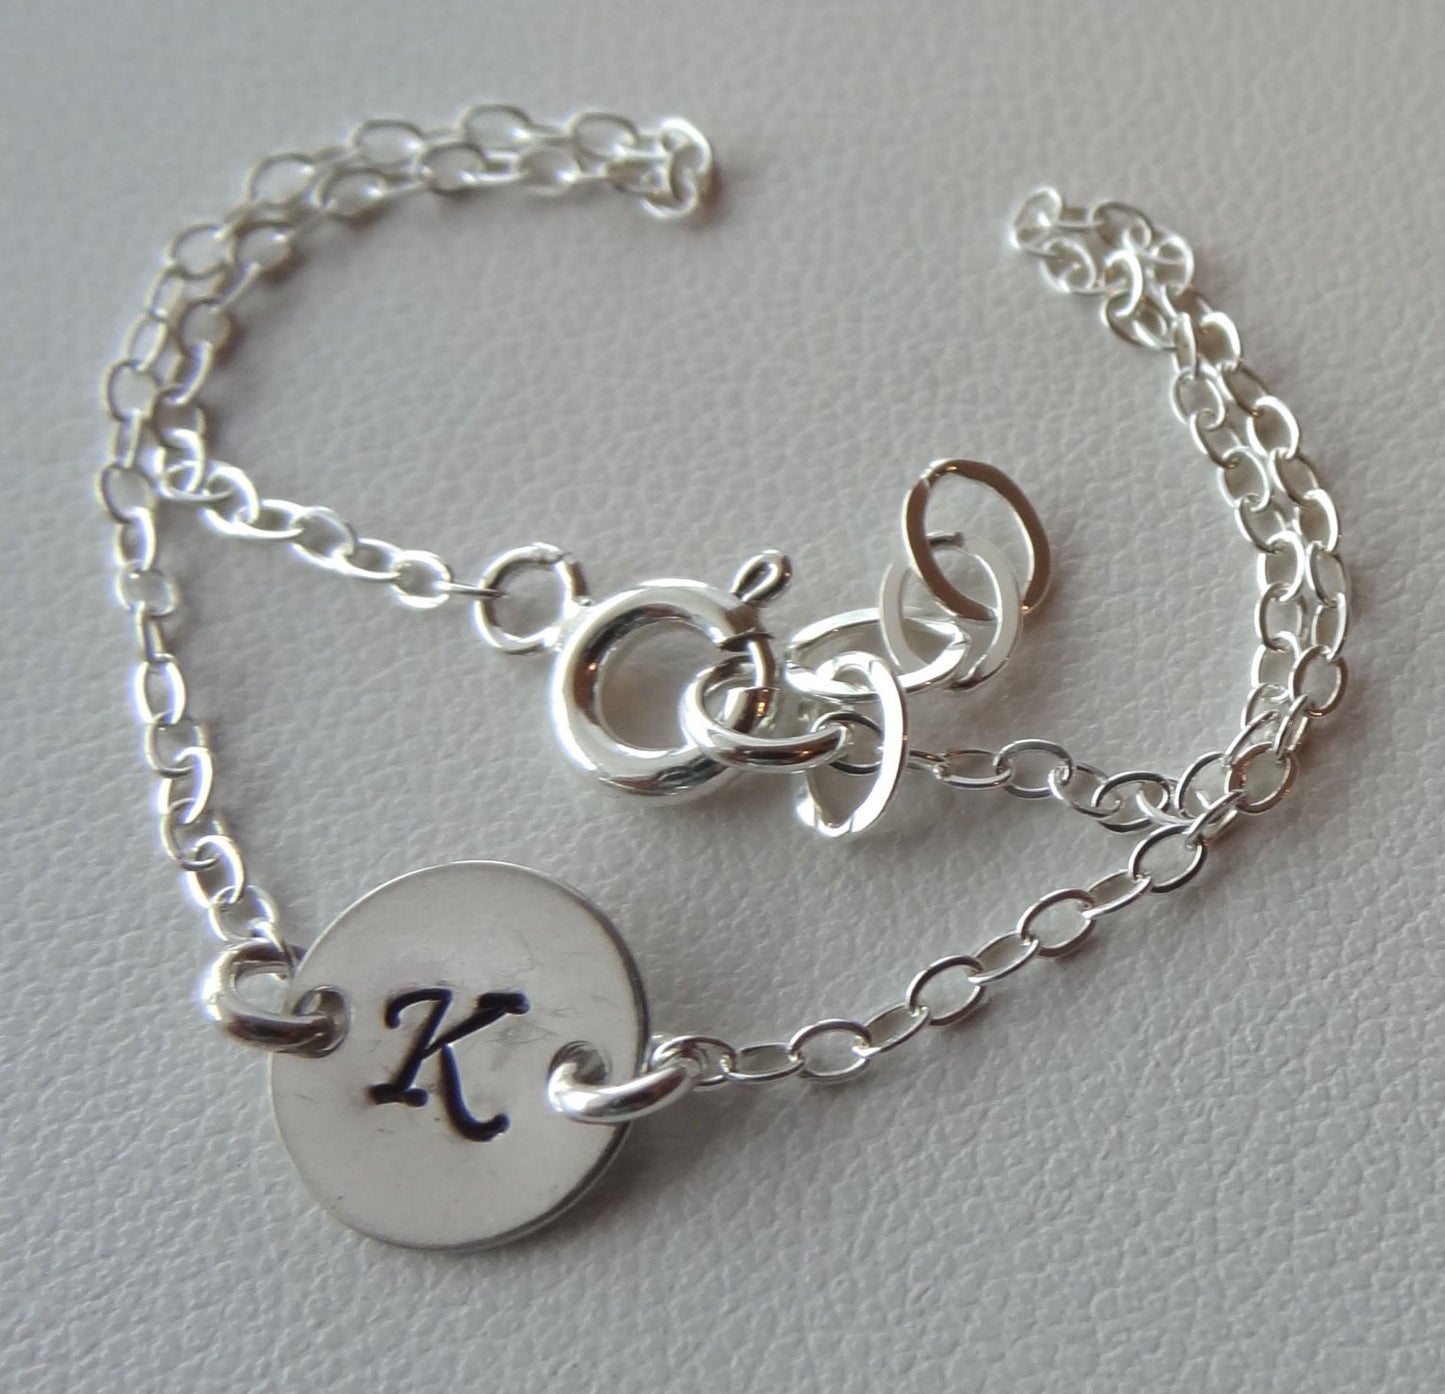 Personalized Family  Bracelet, Initial Disc Bracelet, Mother's Gift Bracelet,  Hand Stamp Bracelet, Grandma's Charm Bracelet, Mom's Bracelet